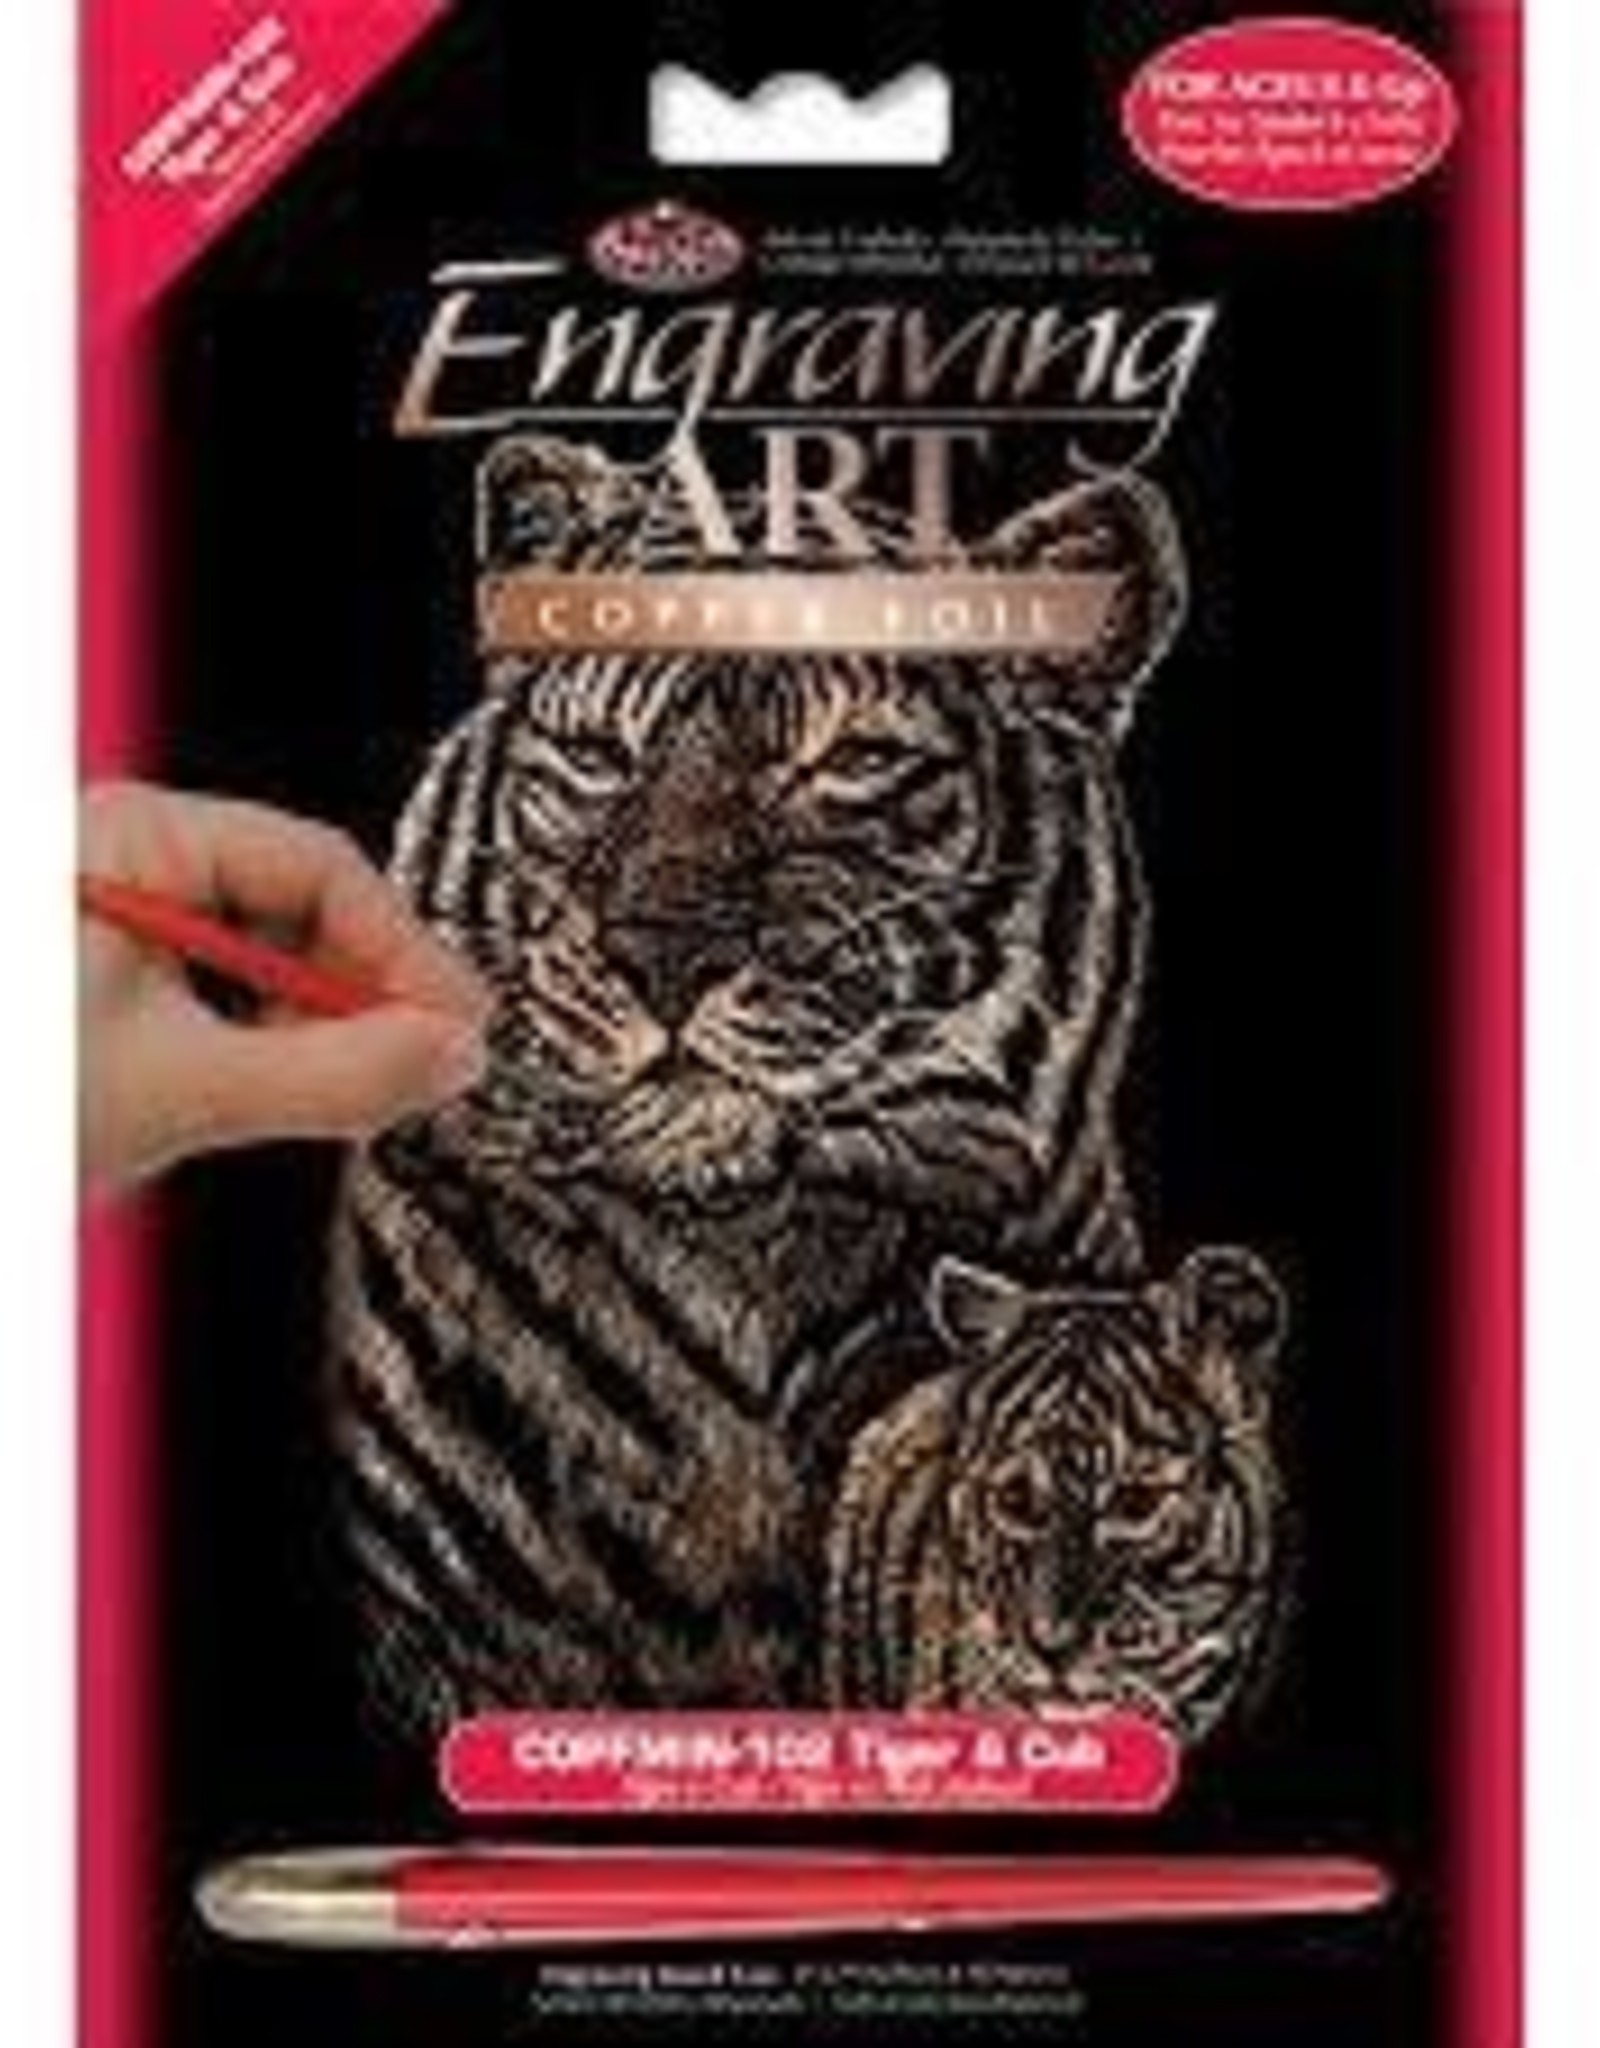 Royal Lang Mini Engraving Art Copper Tiger